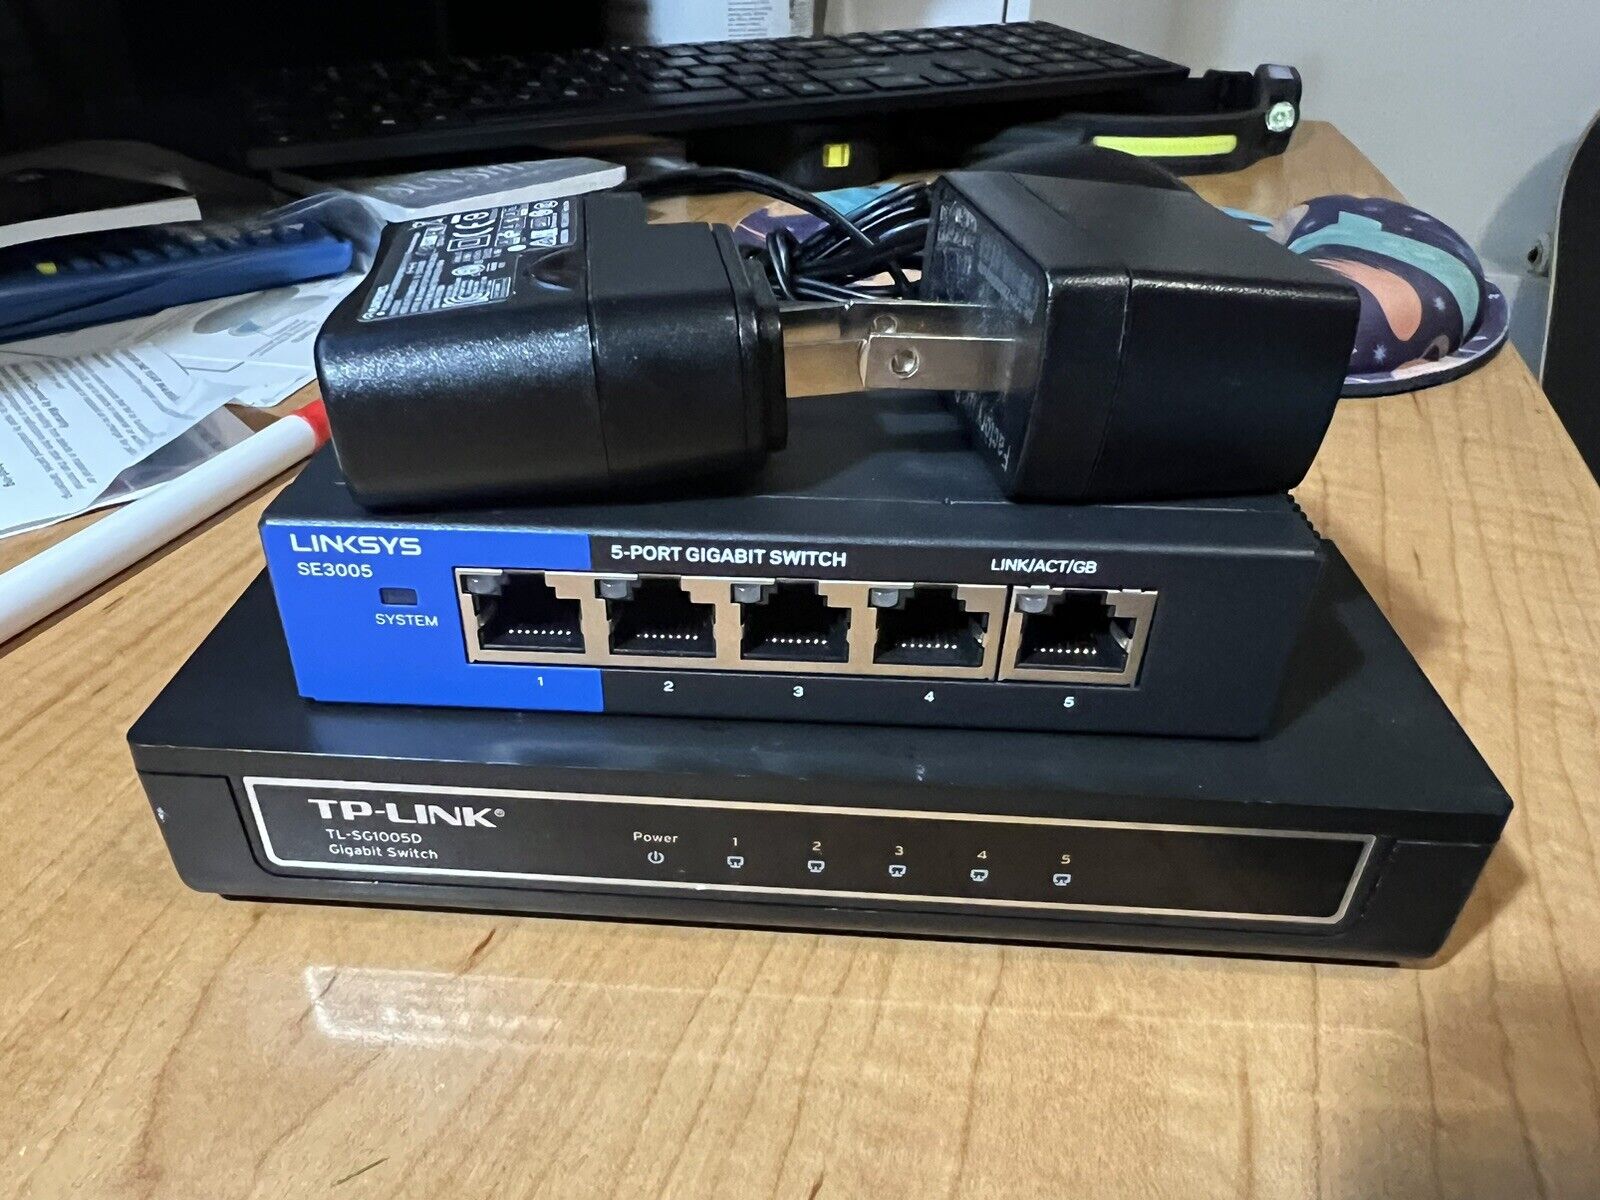 Linksys SE3005v2 AND TP-Link TL-SG1005D 5-port Gigabit Switches, Working